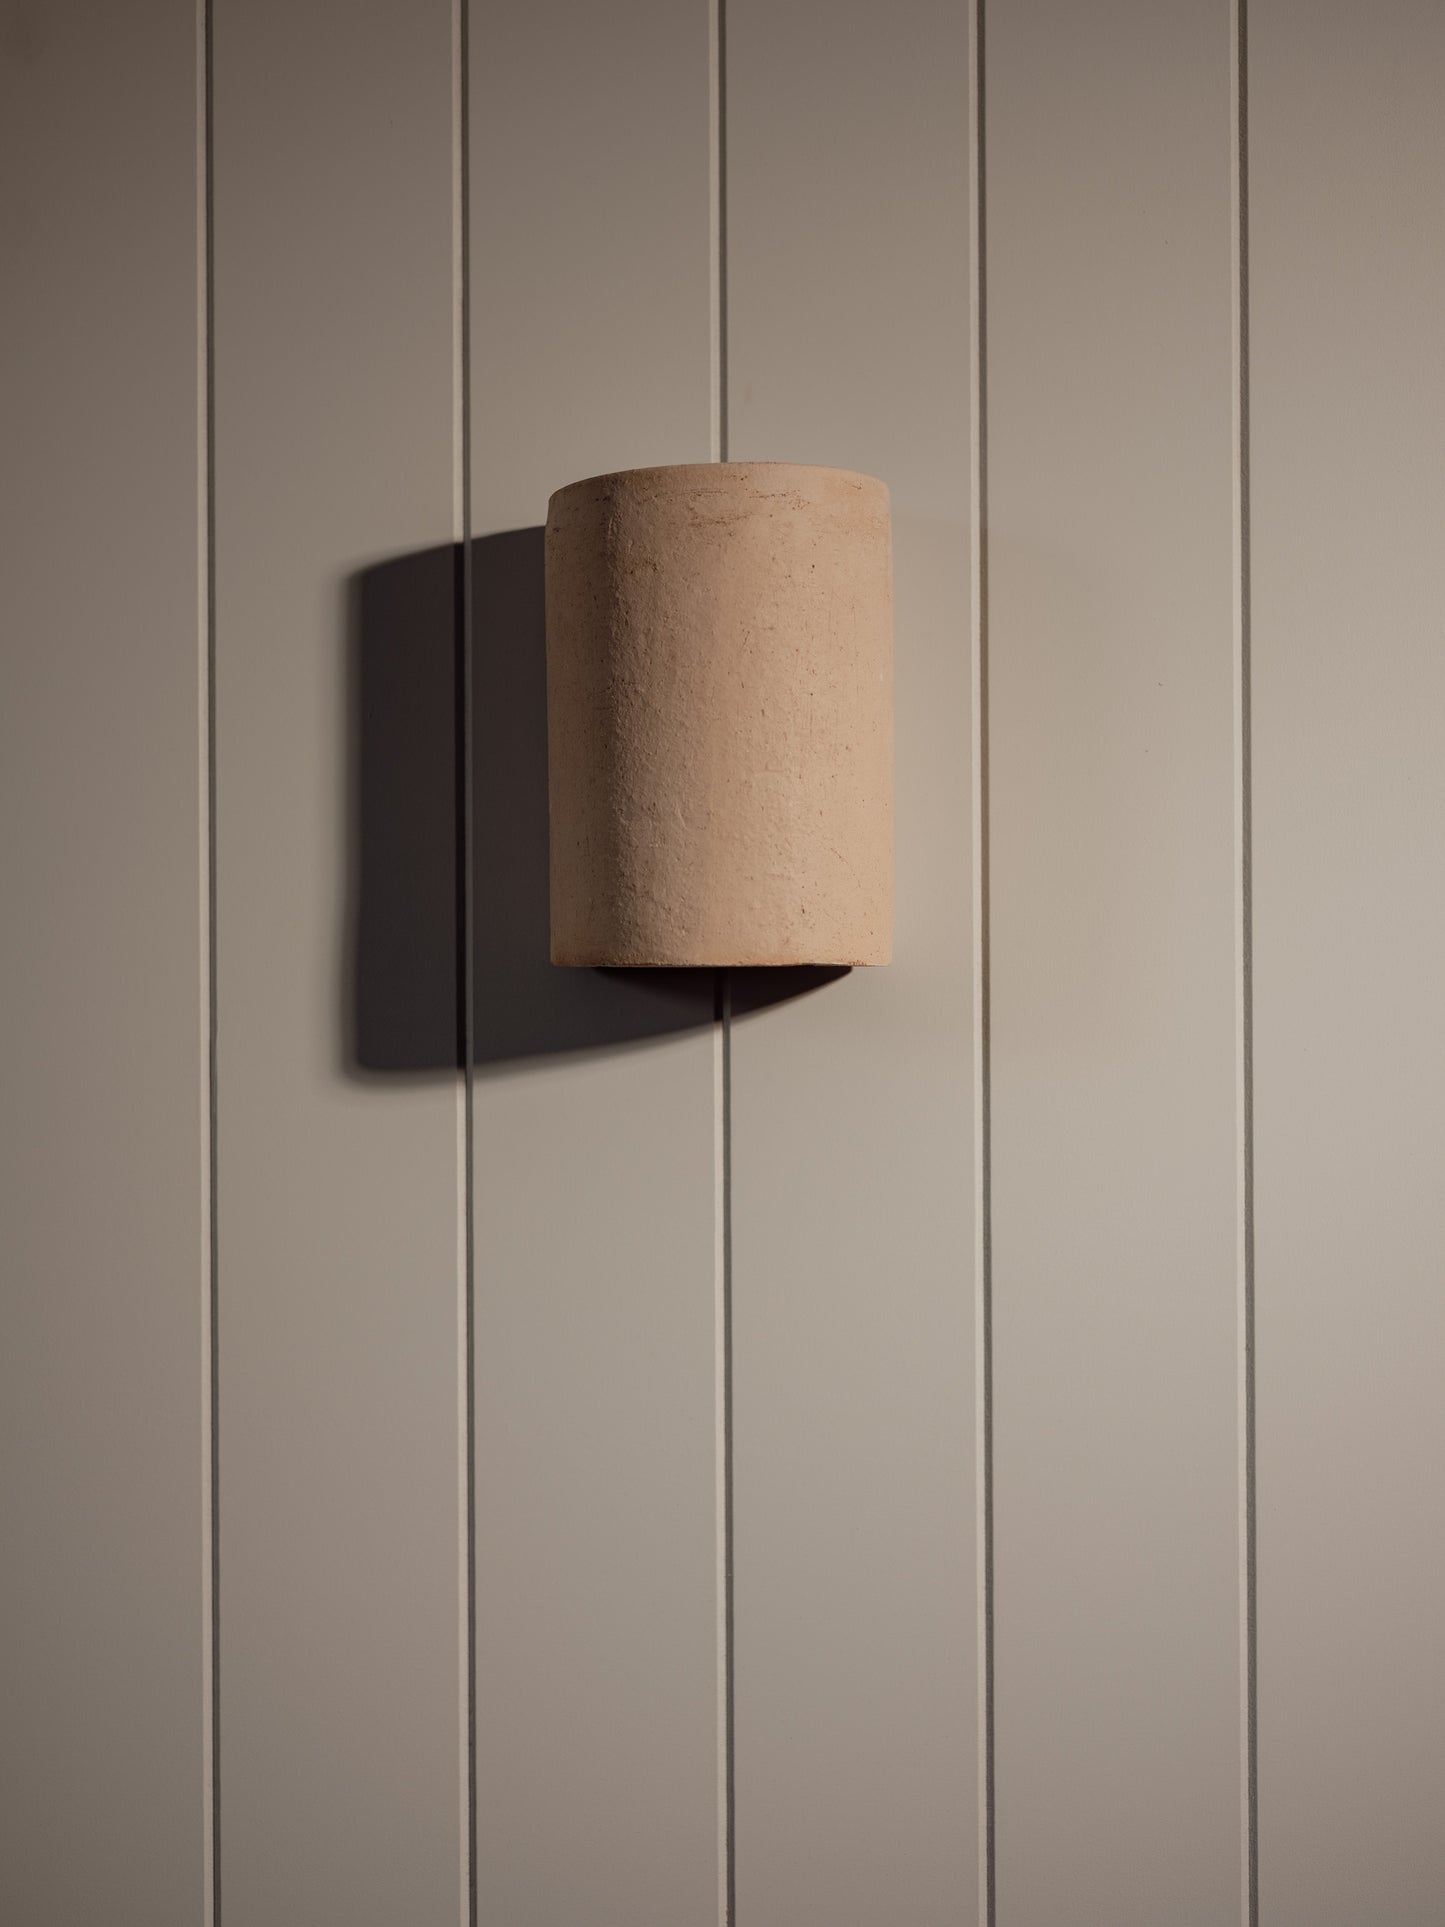 We Ponder | Nudie Exterior Ceramic Wall Light